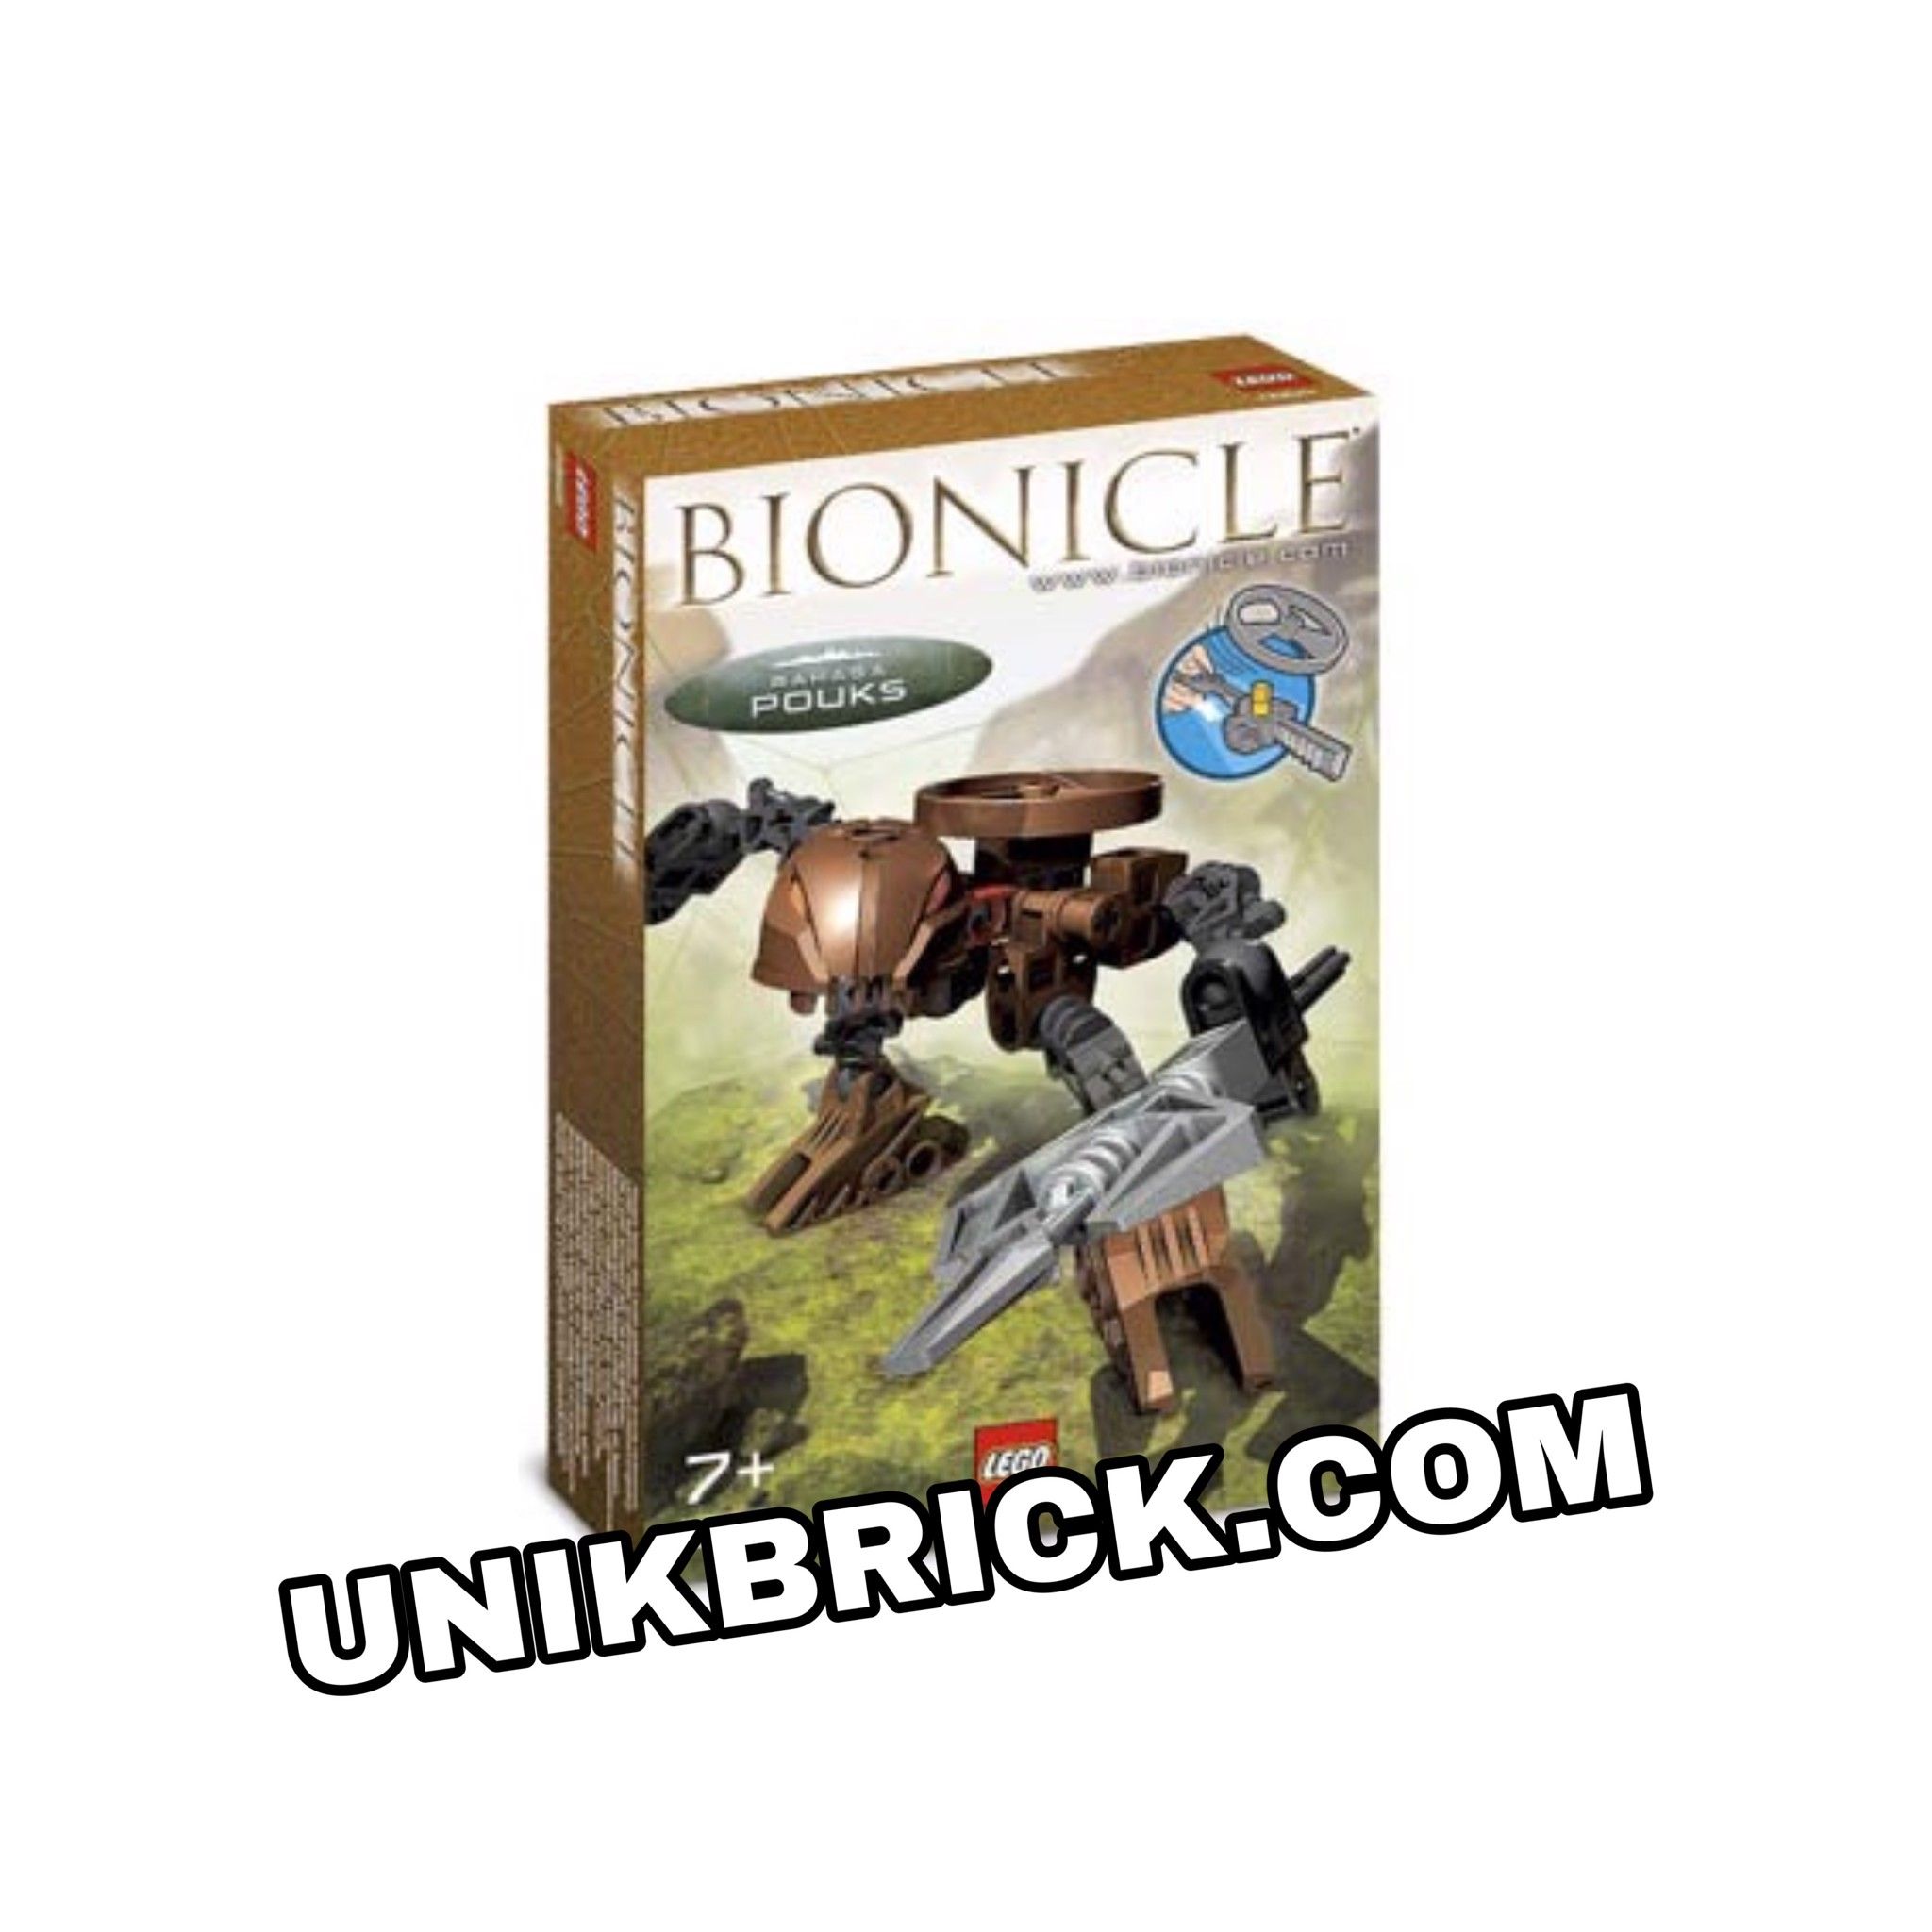 [ORDER ITEMS] LEGO Bionicle 4869 Rahaga Pouks